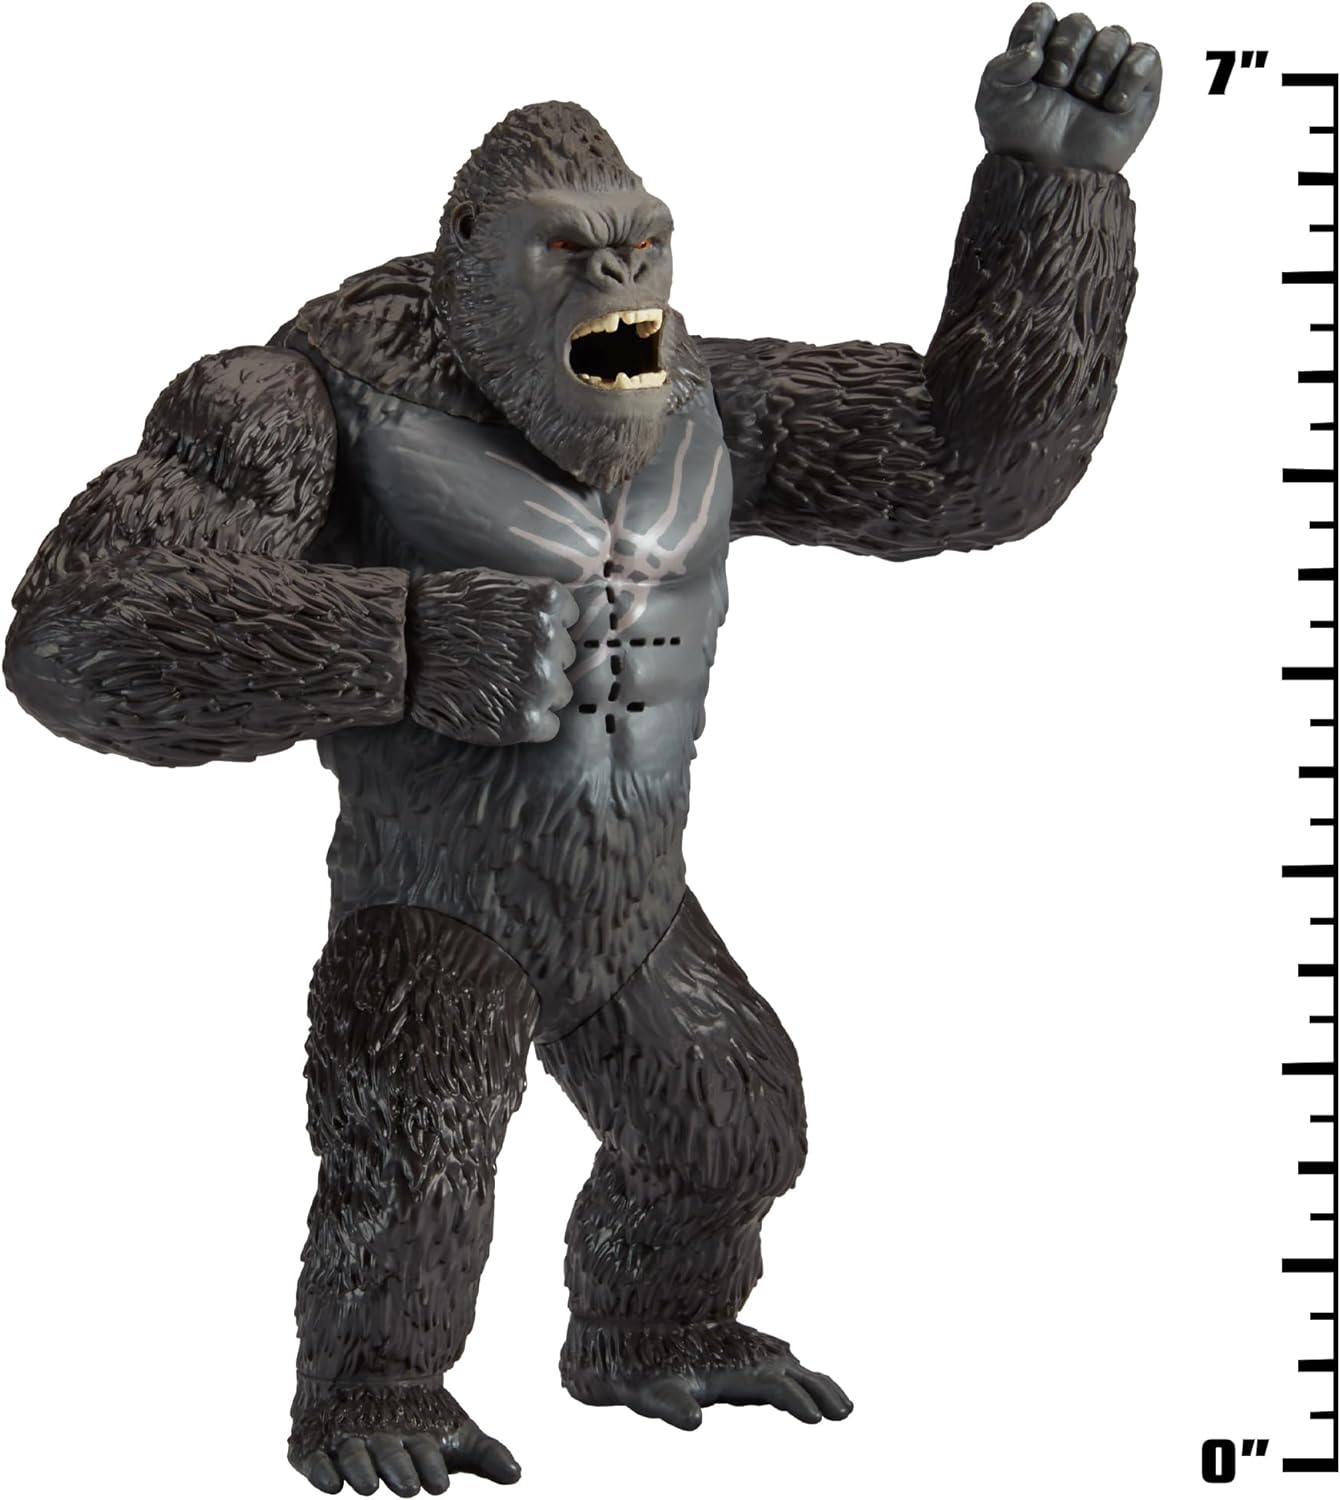 Figura Kong Battle Roar con sonidos Godzilla X Kong The New Empire